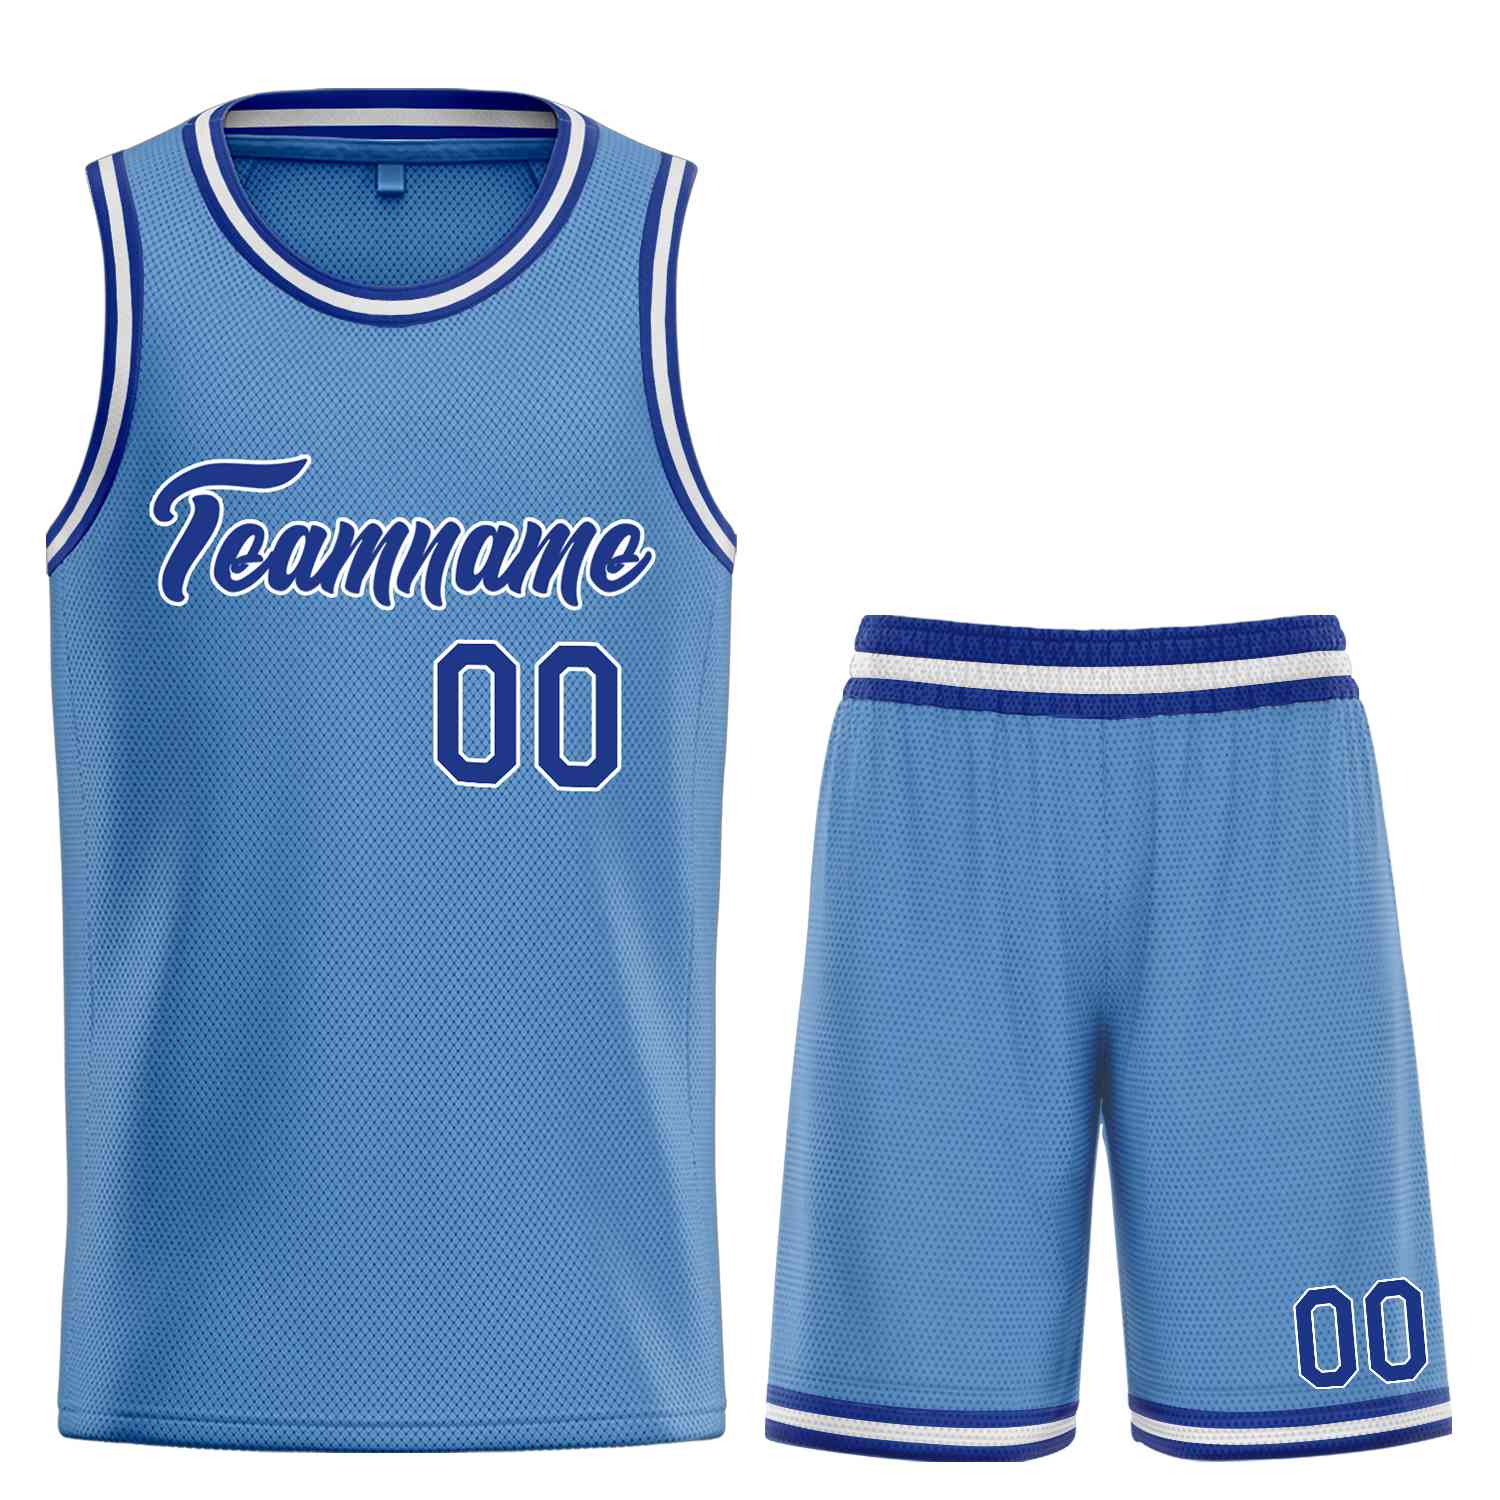 Wholesale Sports uniform manufacturers basketball jersey sky blue